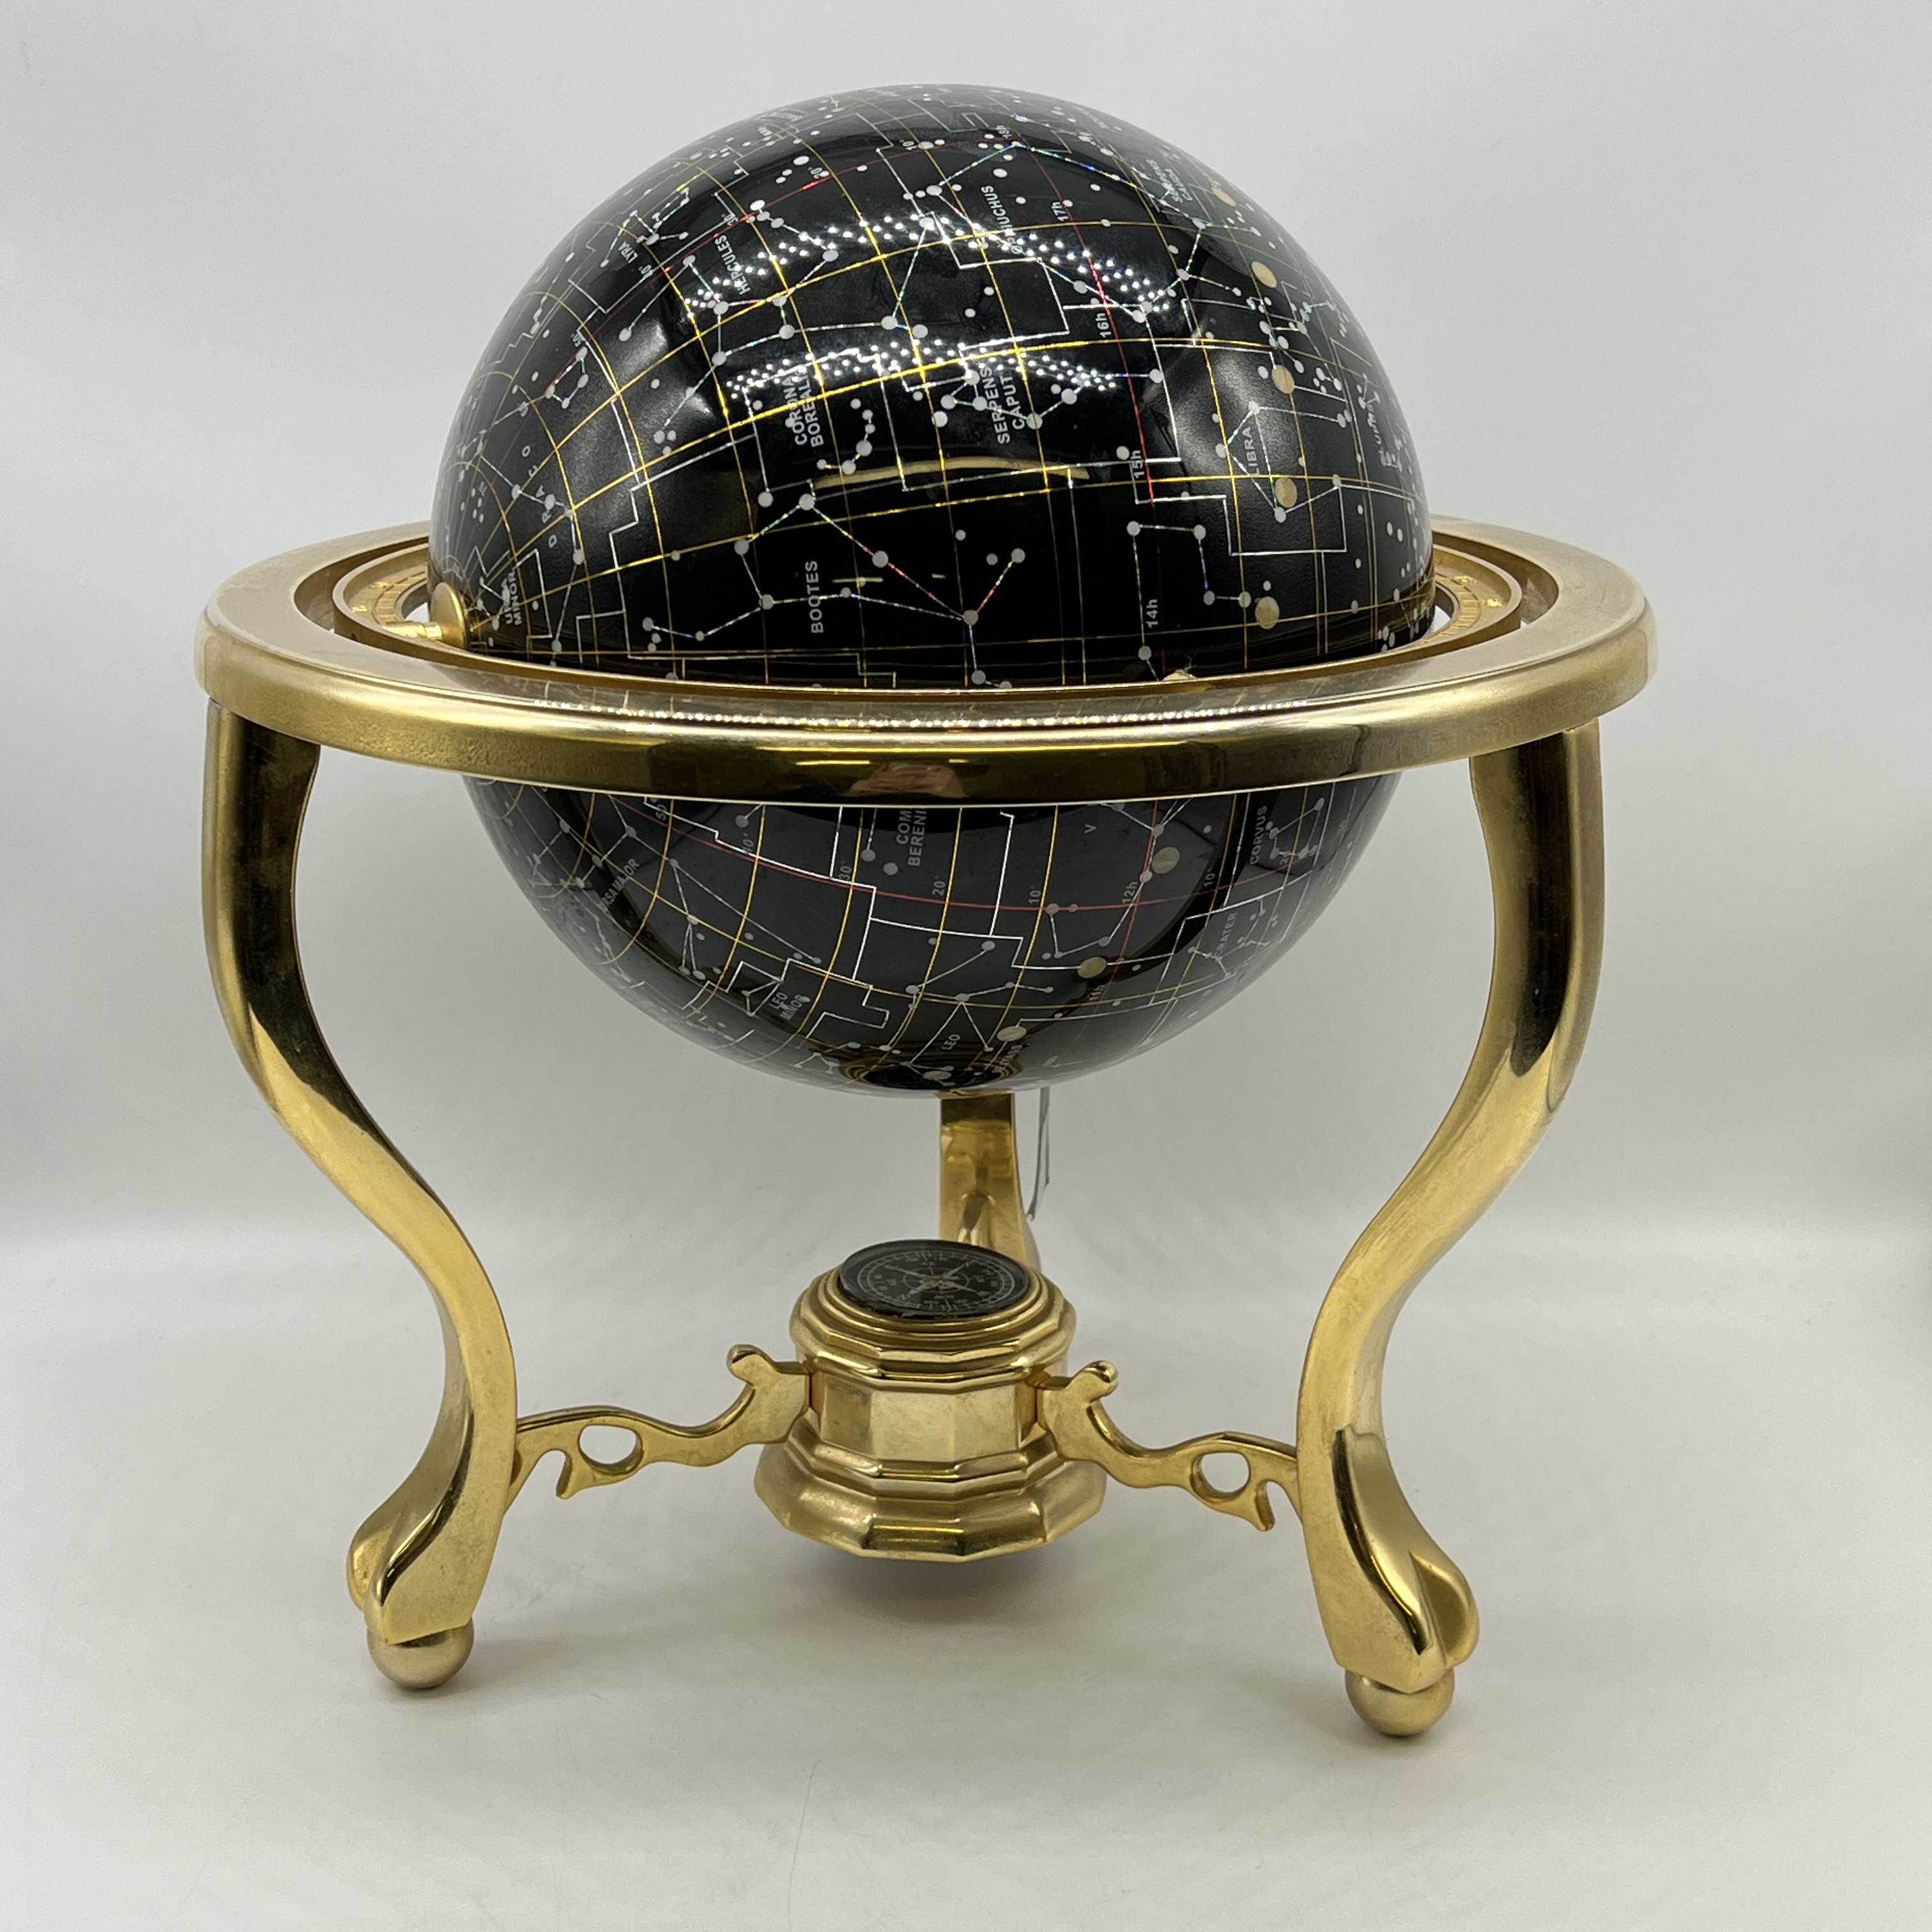 An ornamental globe of the constillation stars